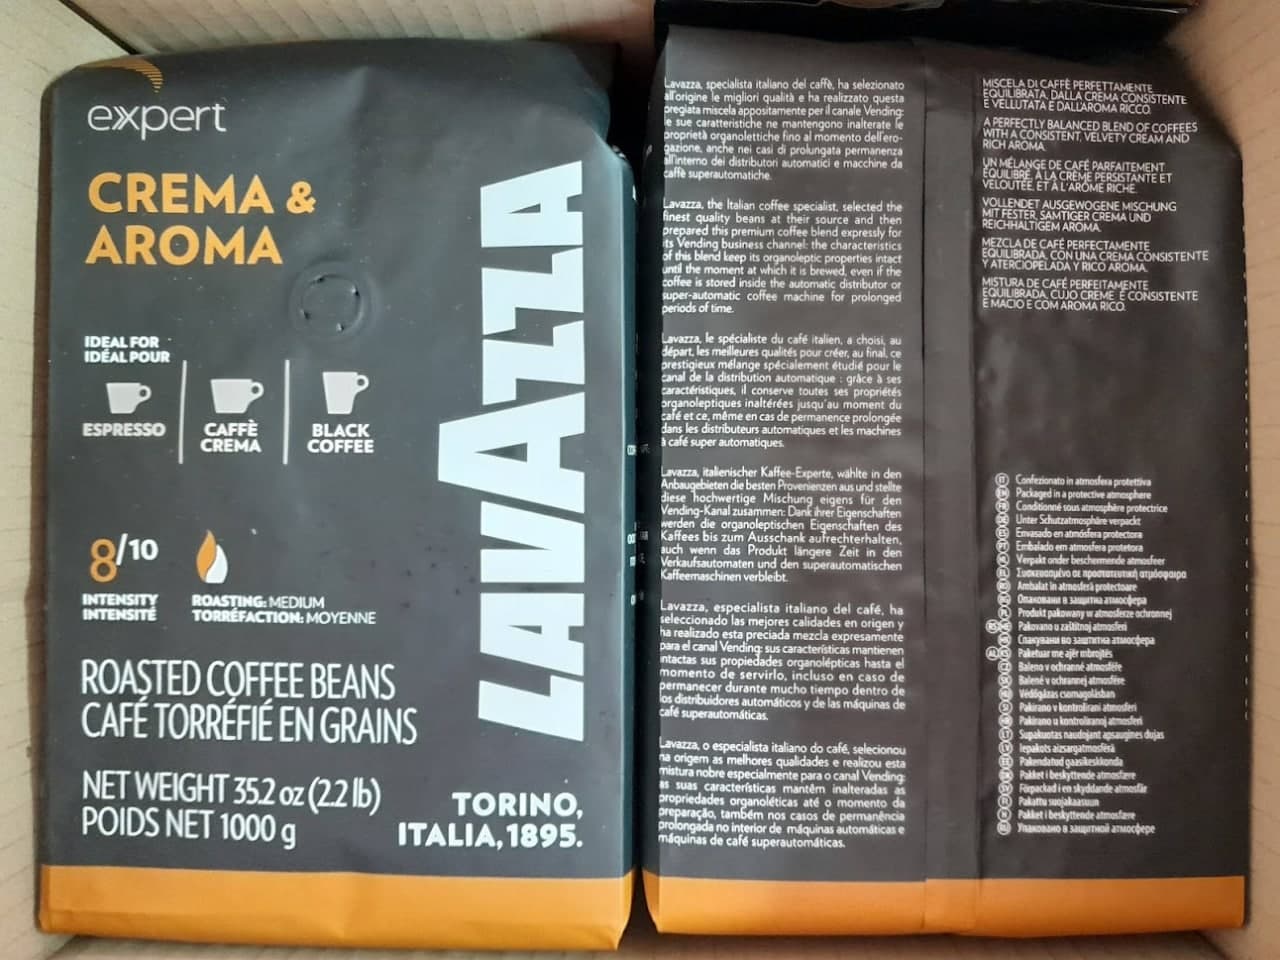 Зерновой кофе "LAVAZZA" Expert Crema e Aroma